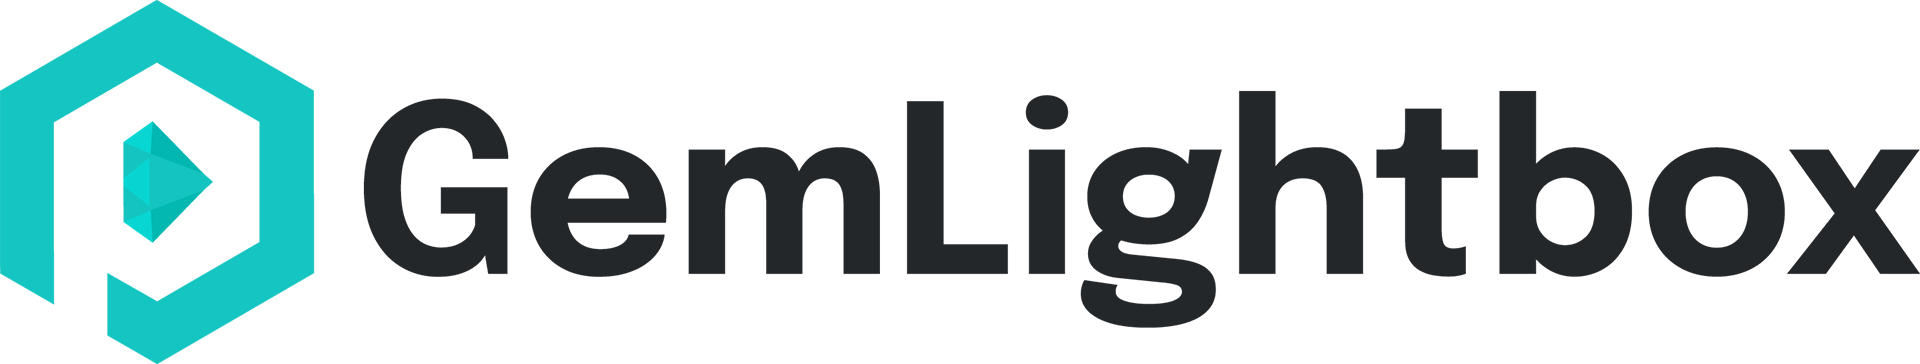 GemLightbox Logo Black